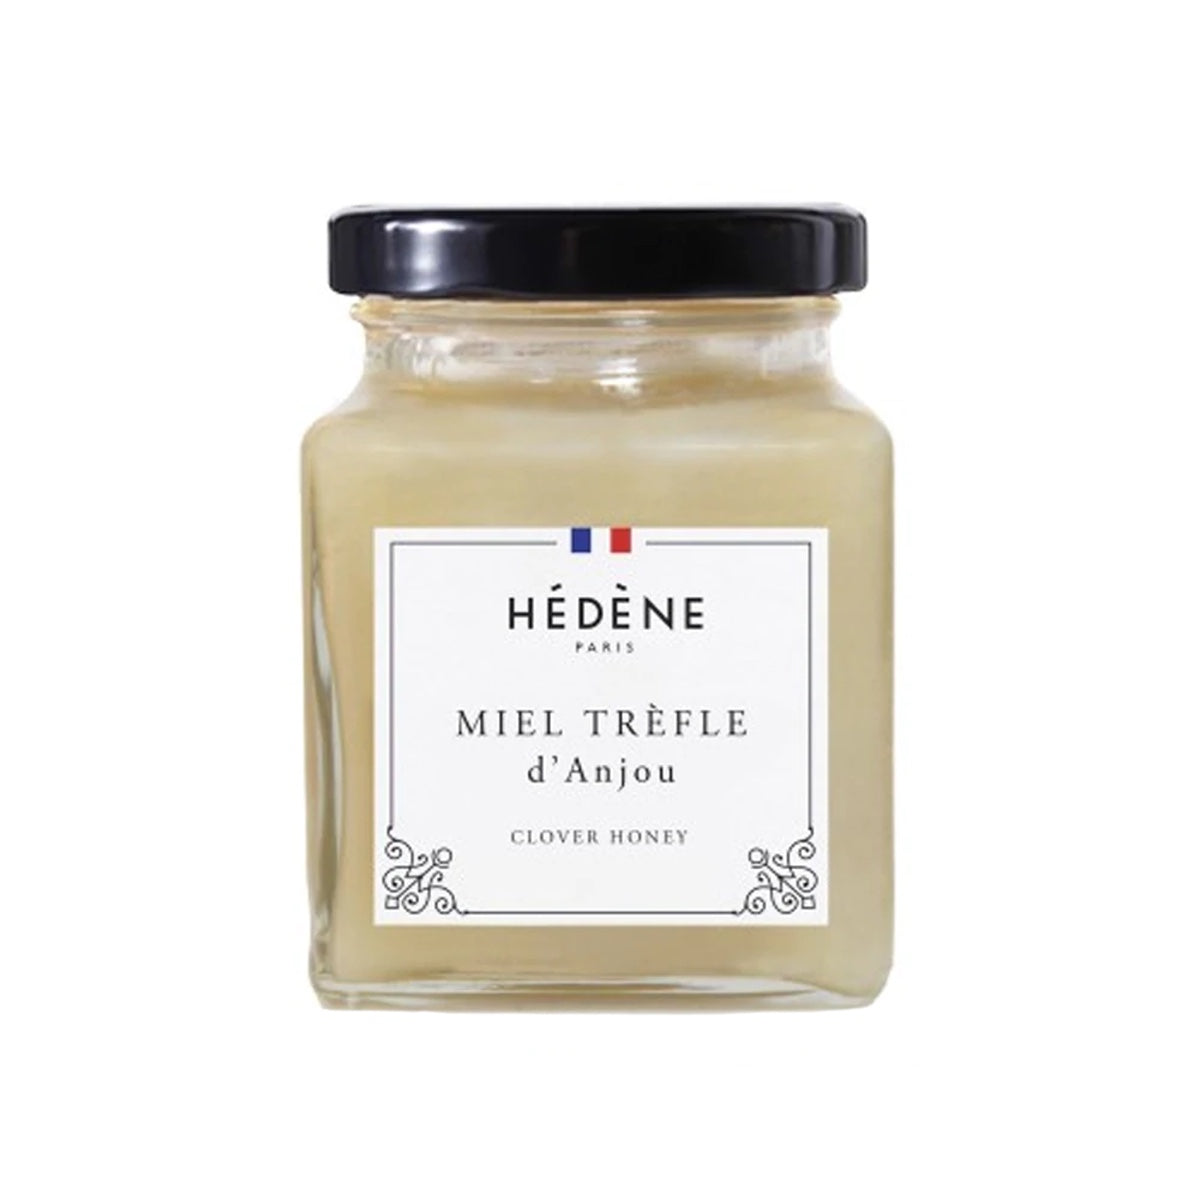 Miel Trefle d'Anjou - Clover Honey